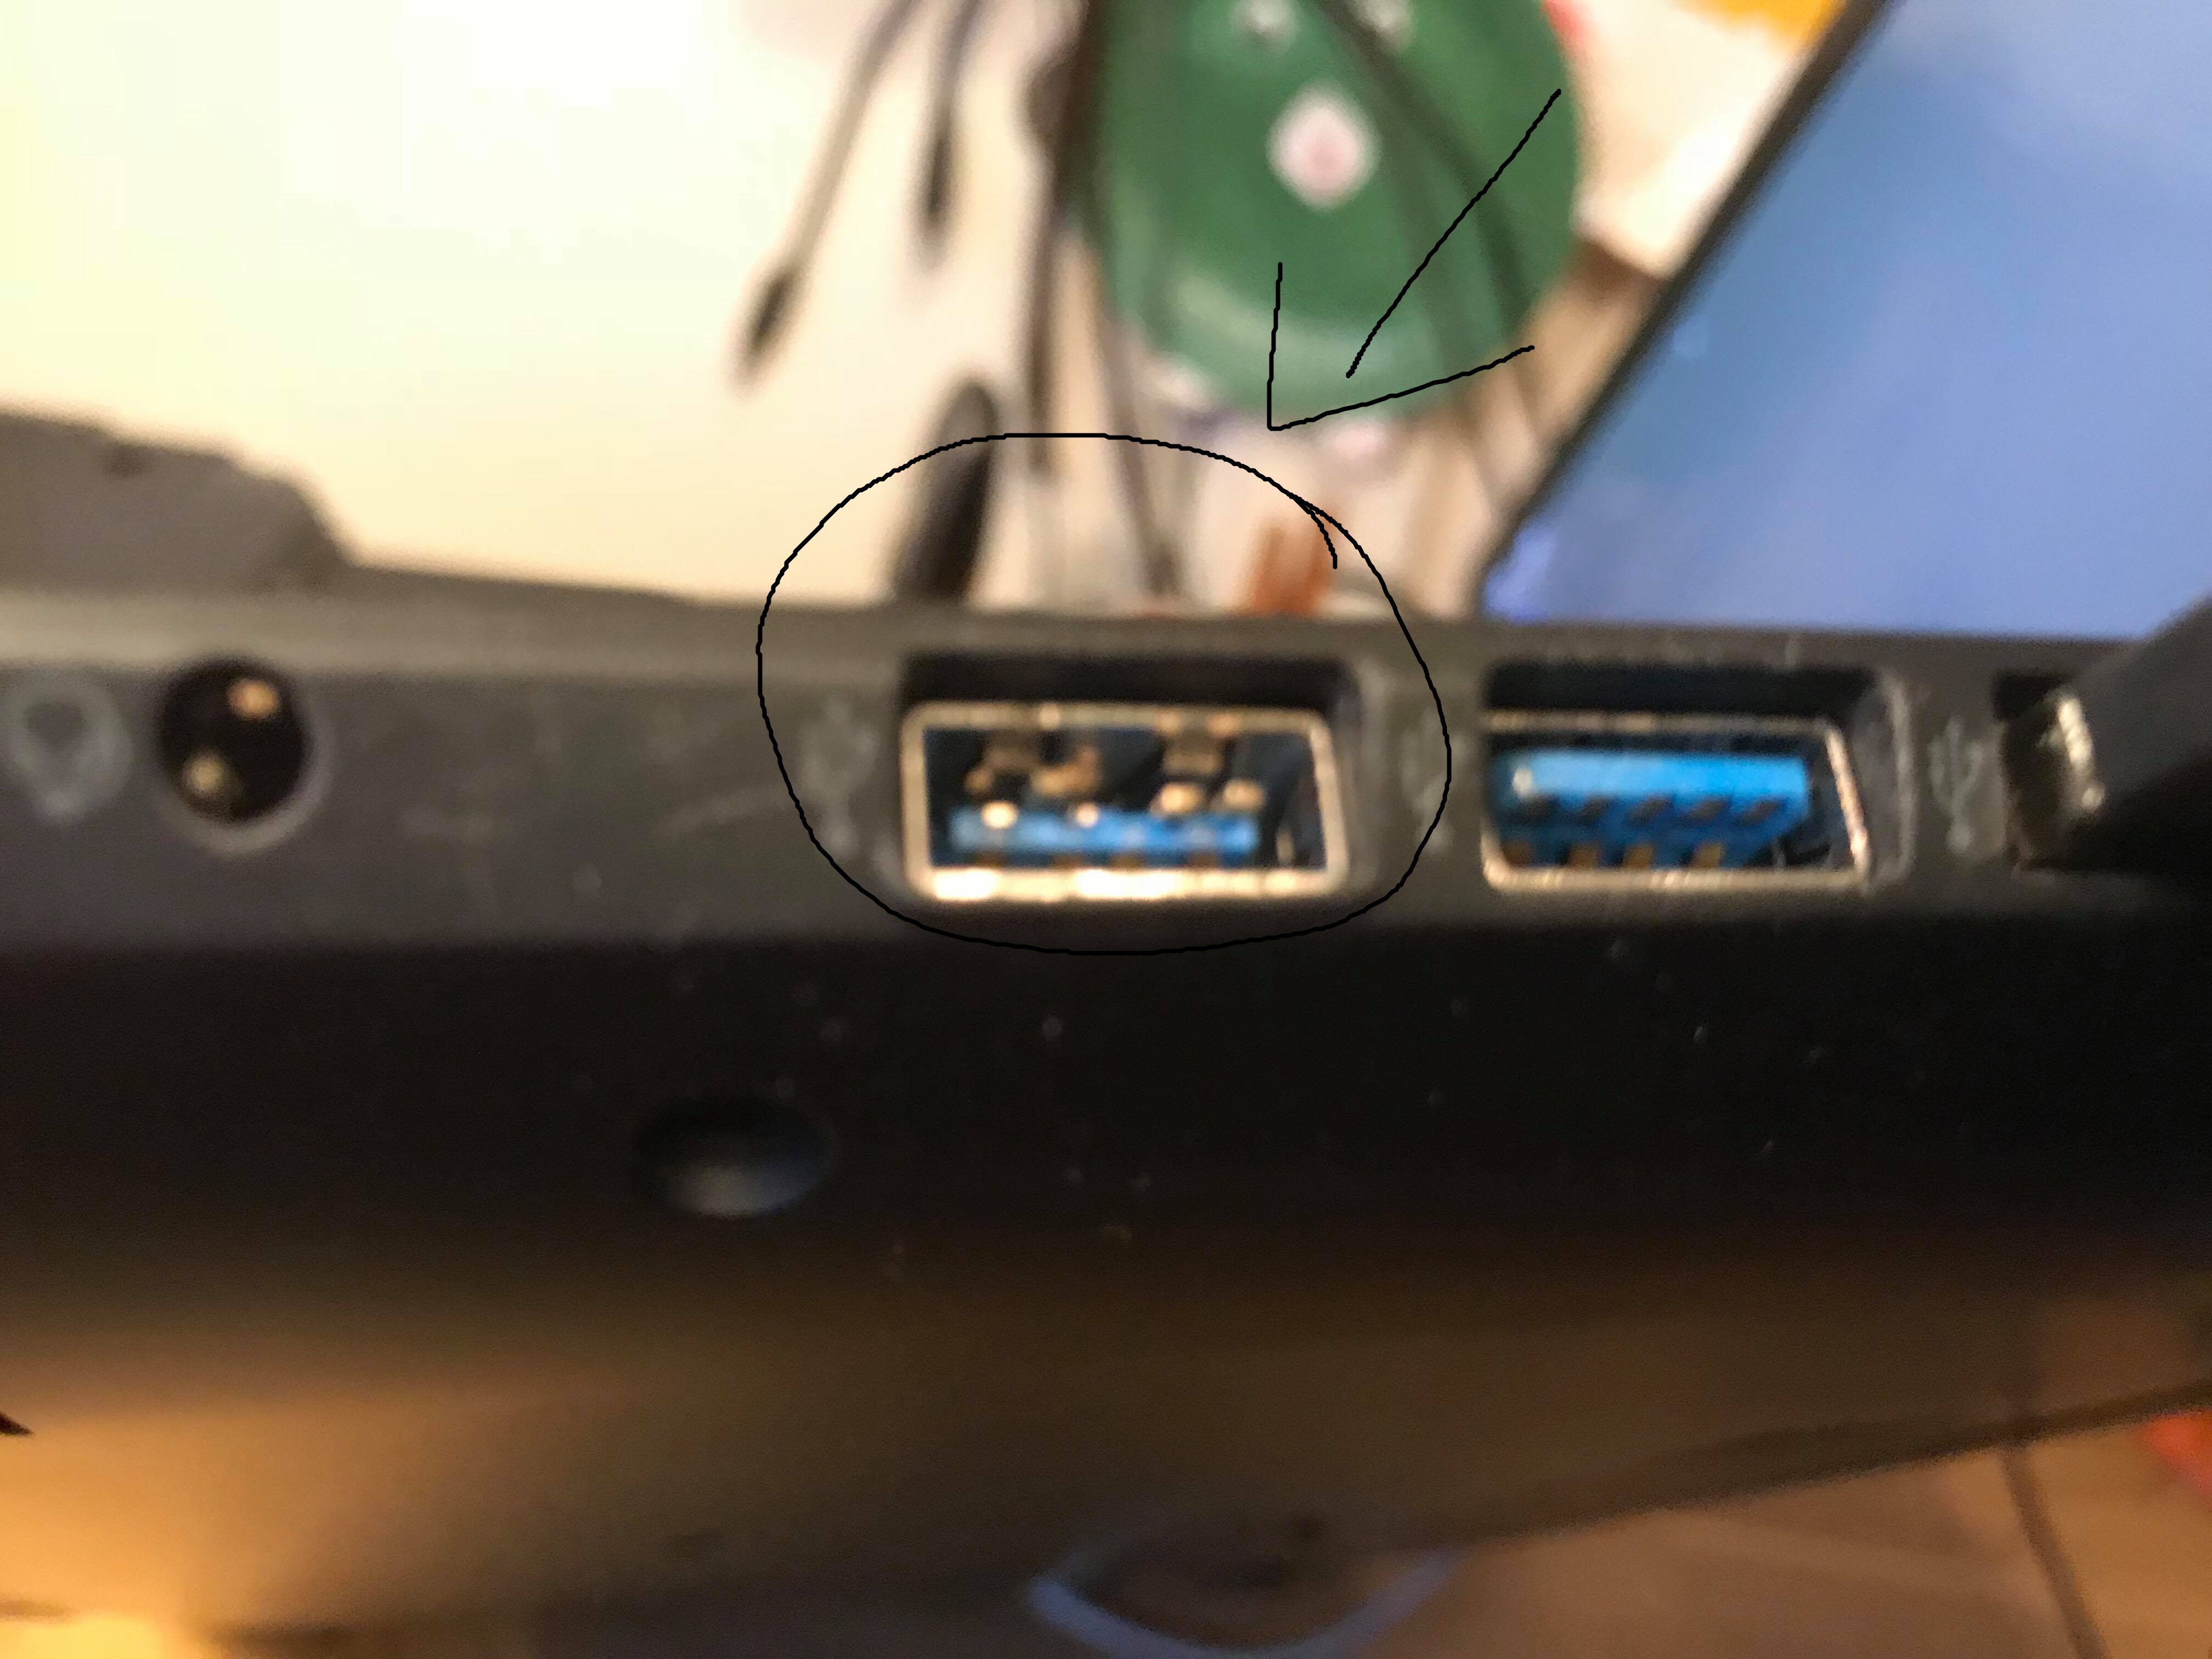 Broken USB port. - Peripherals - Linus Tech Tips